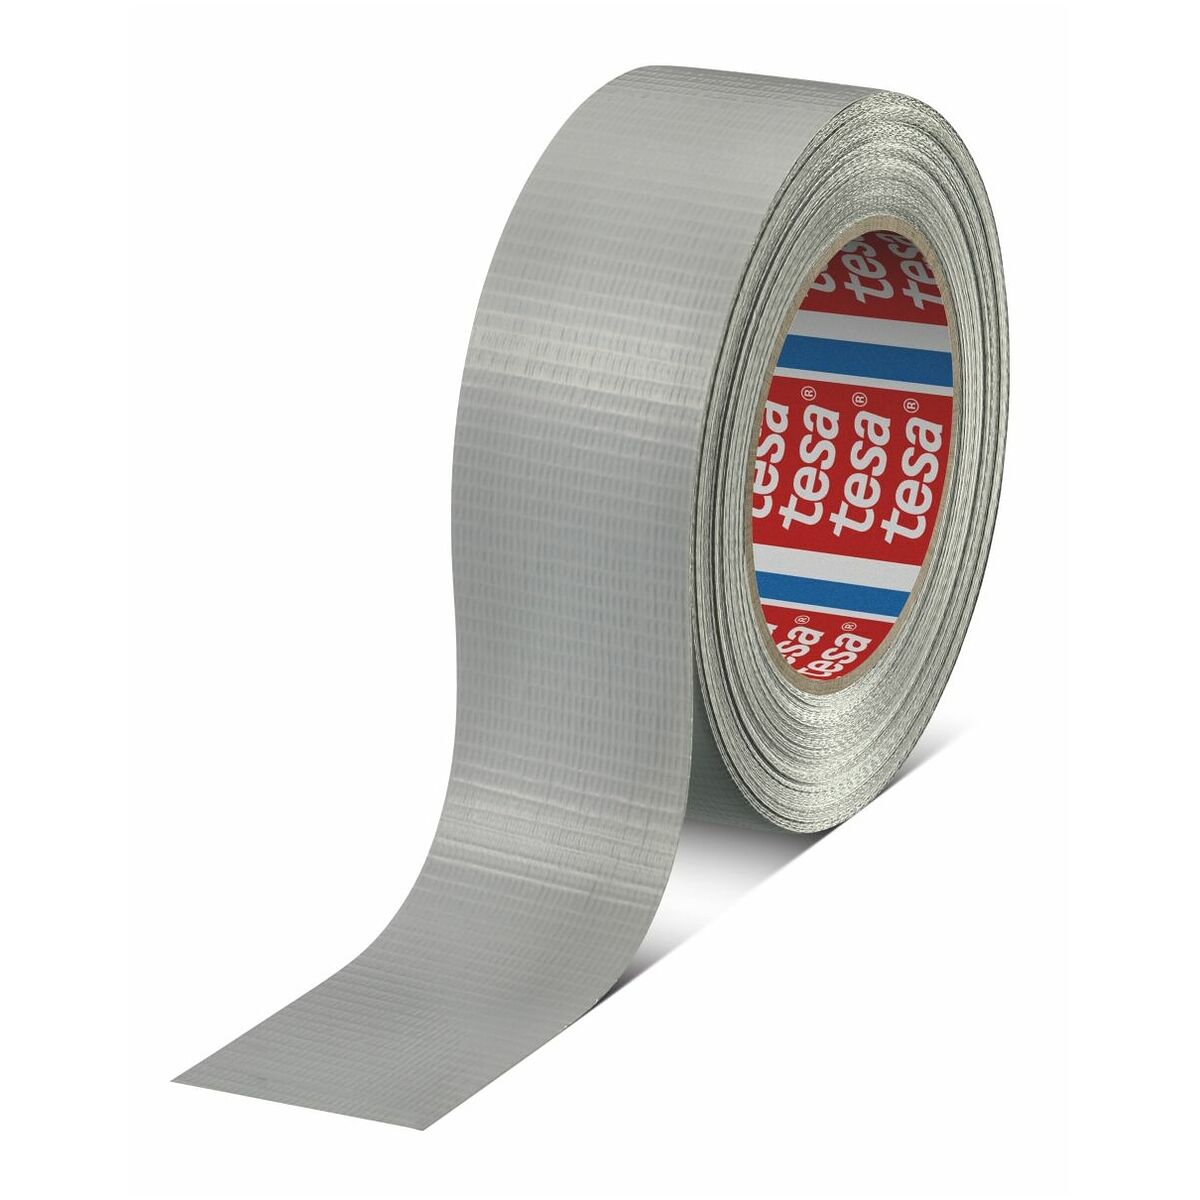 Simply buy Fabric adhesive tape 48X50